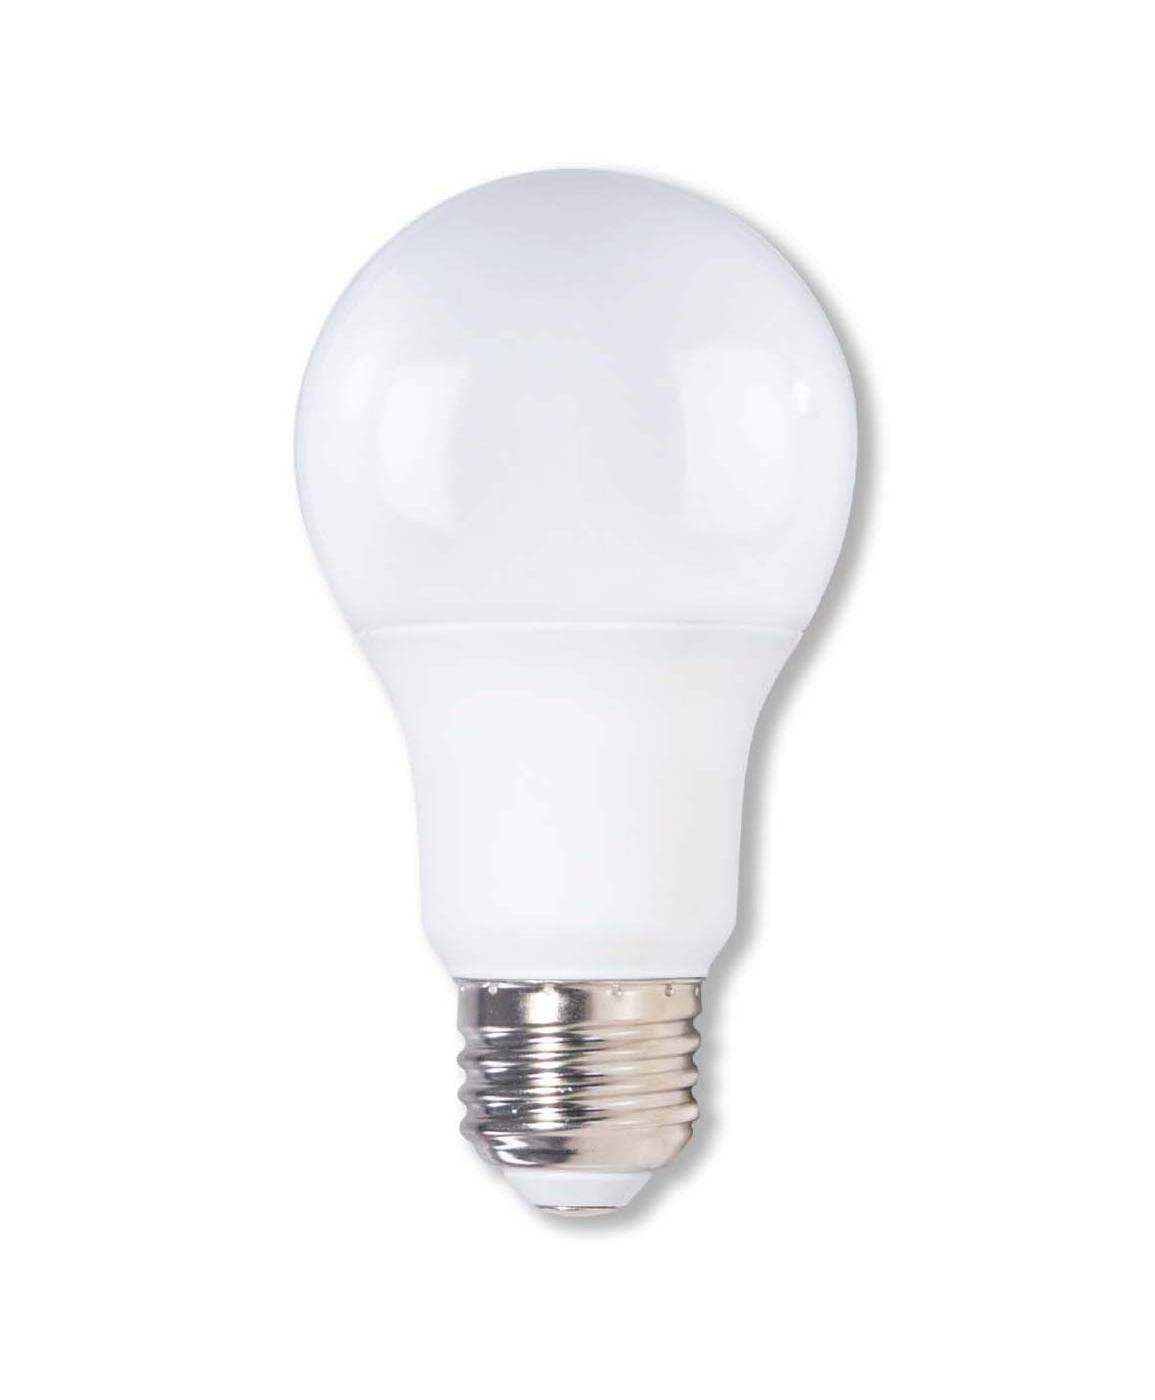 H-E-B Double Life A19 100-Watt LED Light Bulbs - Bright White; image 2 of 2